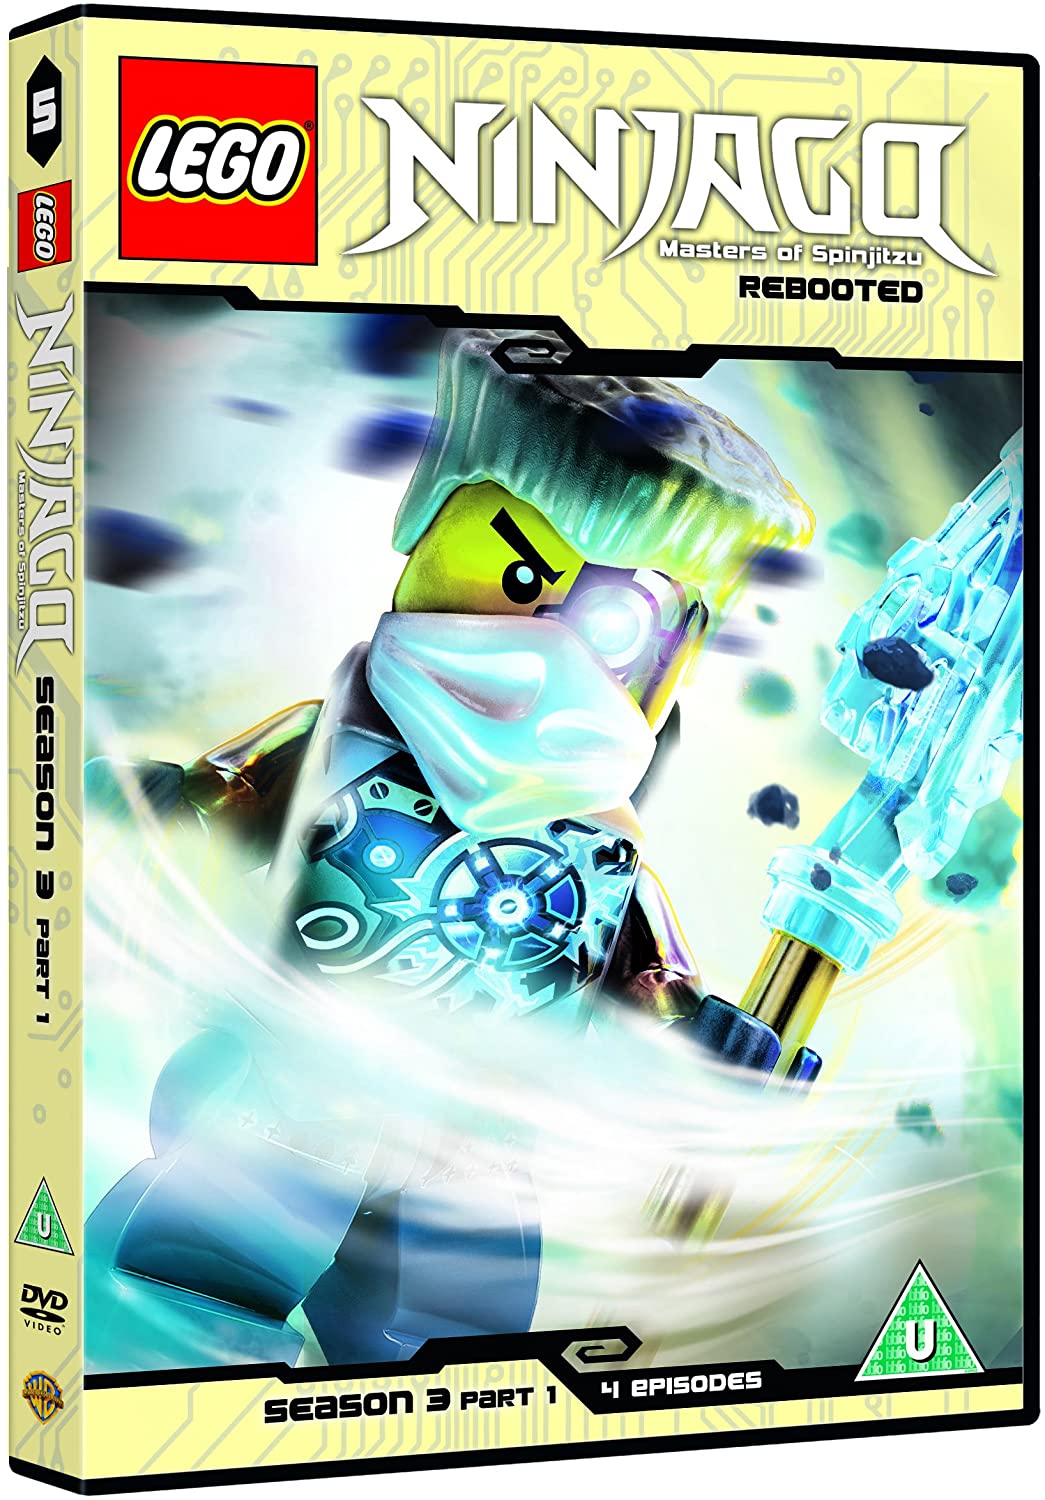 Lego: Ninjago S3 PT1 S) [2017] - Animation [DVD]